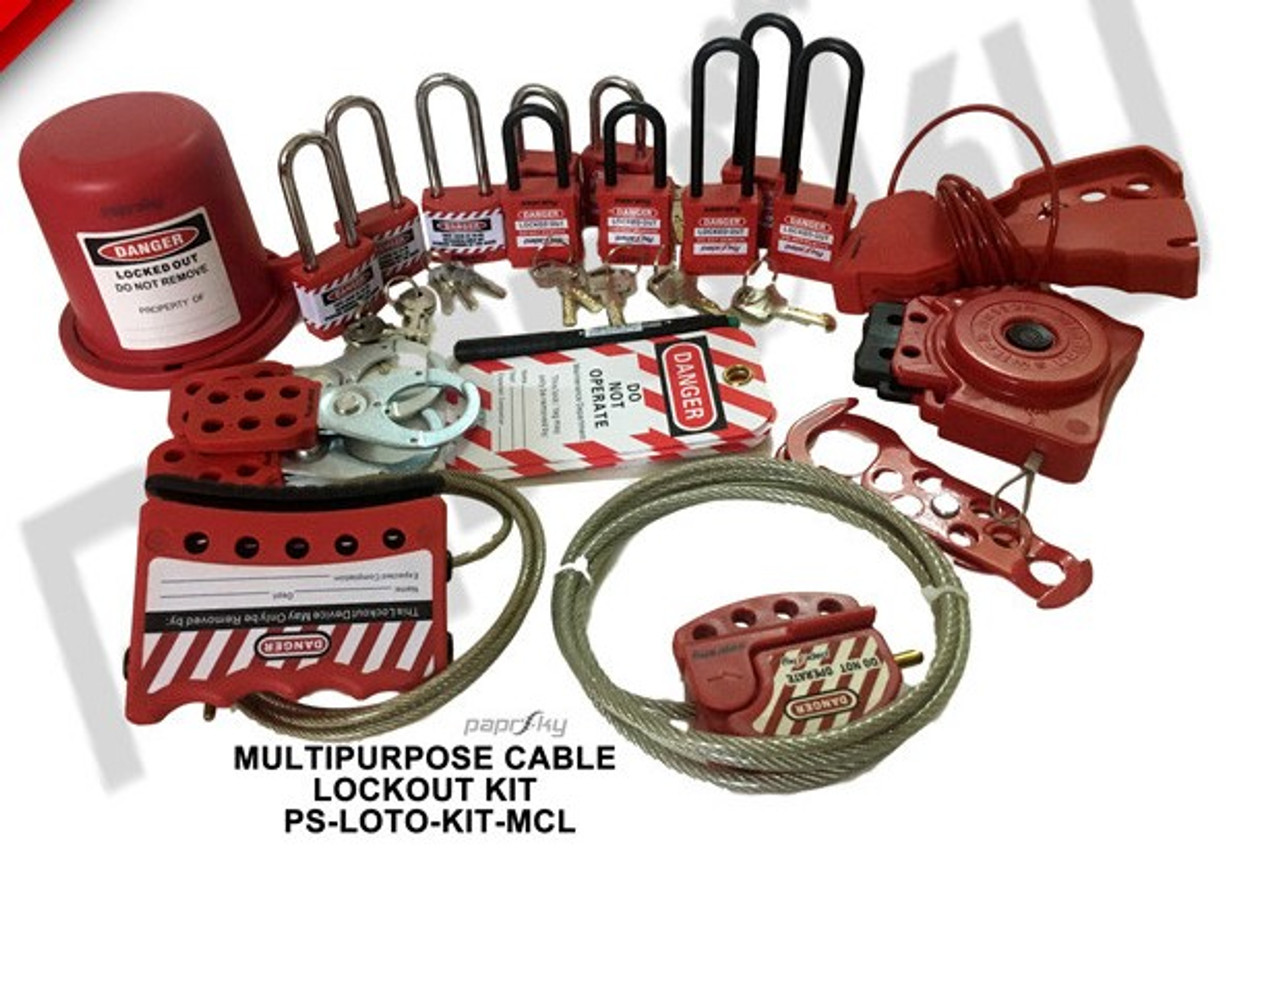 Multipurpose Cable Lockout Kit Customized - PS-LOTO-KIT-MCL